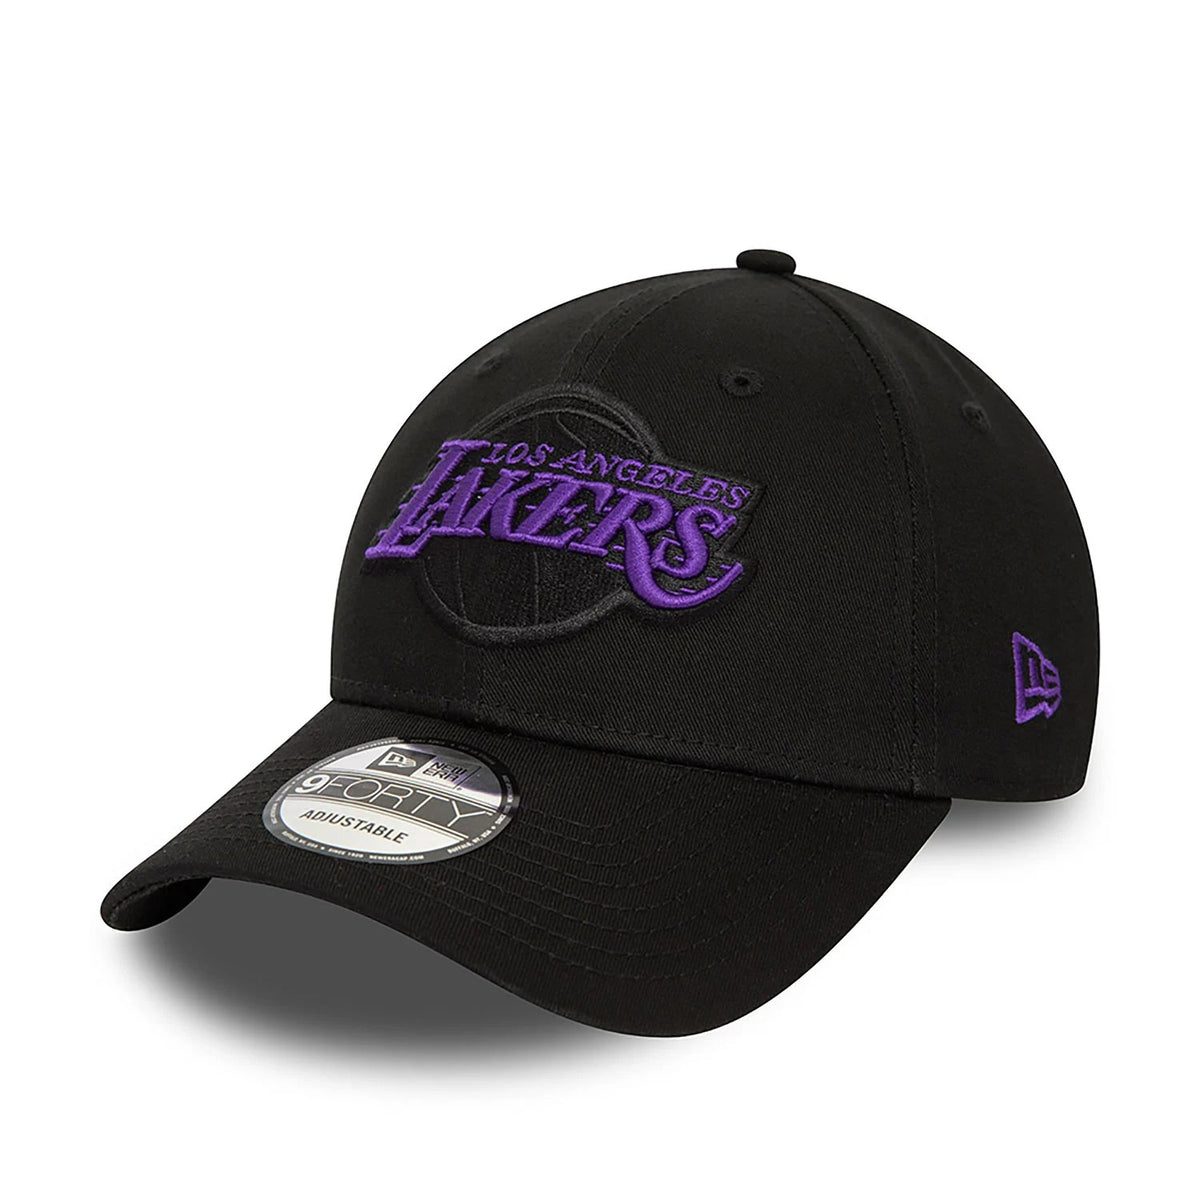 New Era Los Angeles Lakers NBA unisex cap in black